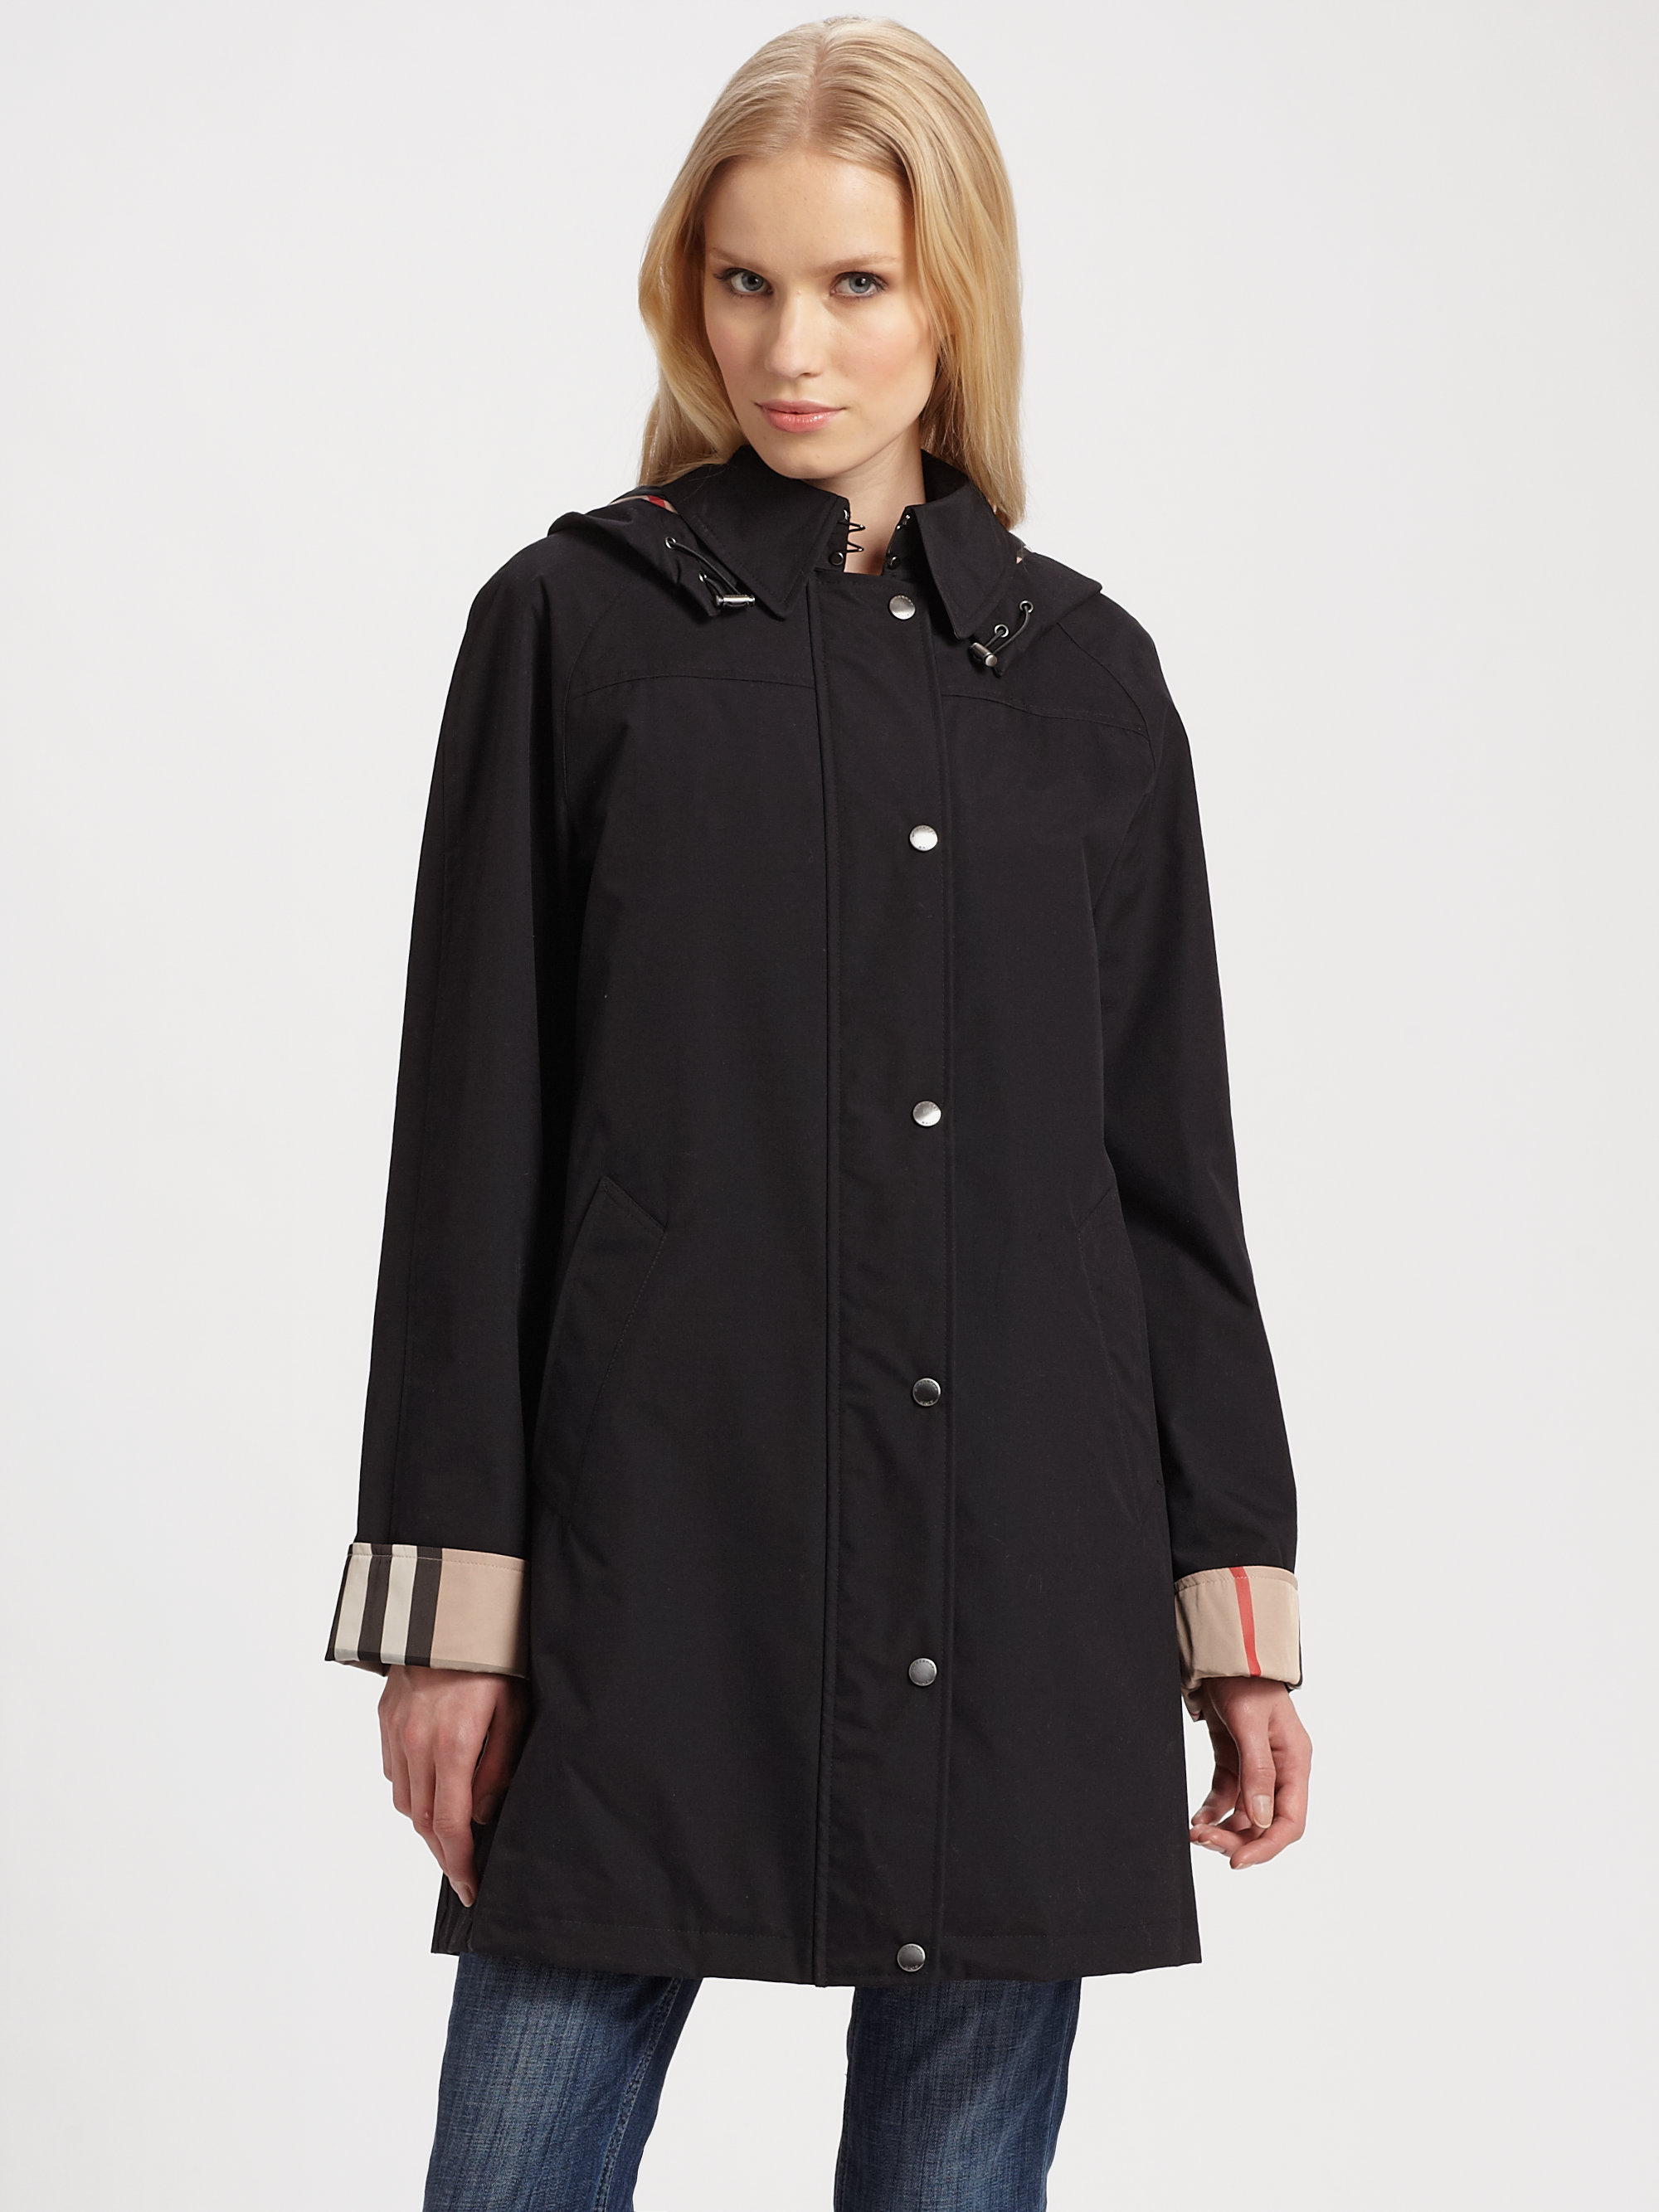 Burberry Brit Hattingly Raincoat in Black | Lyst